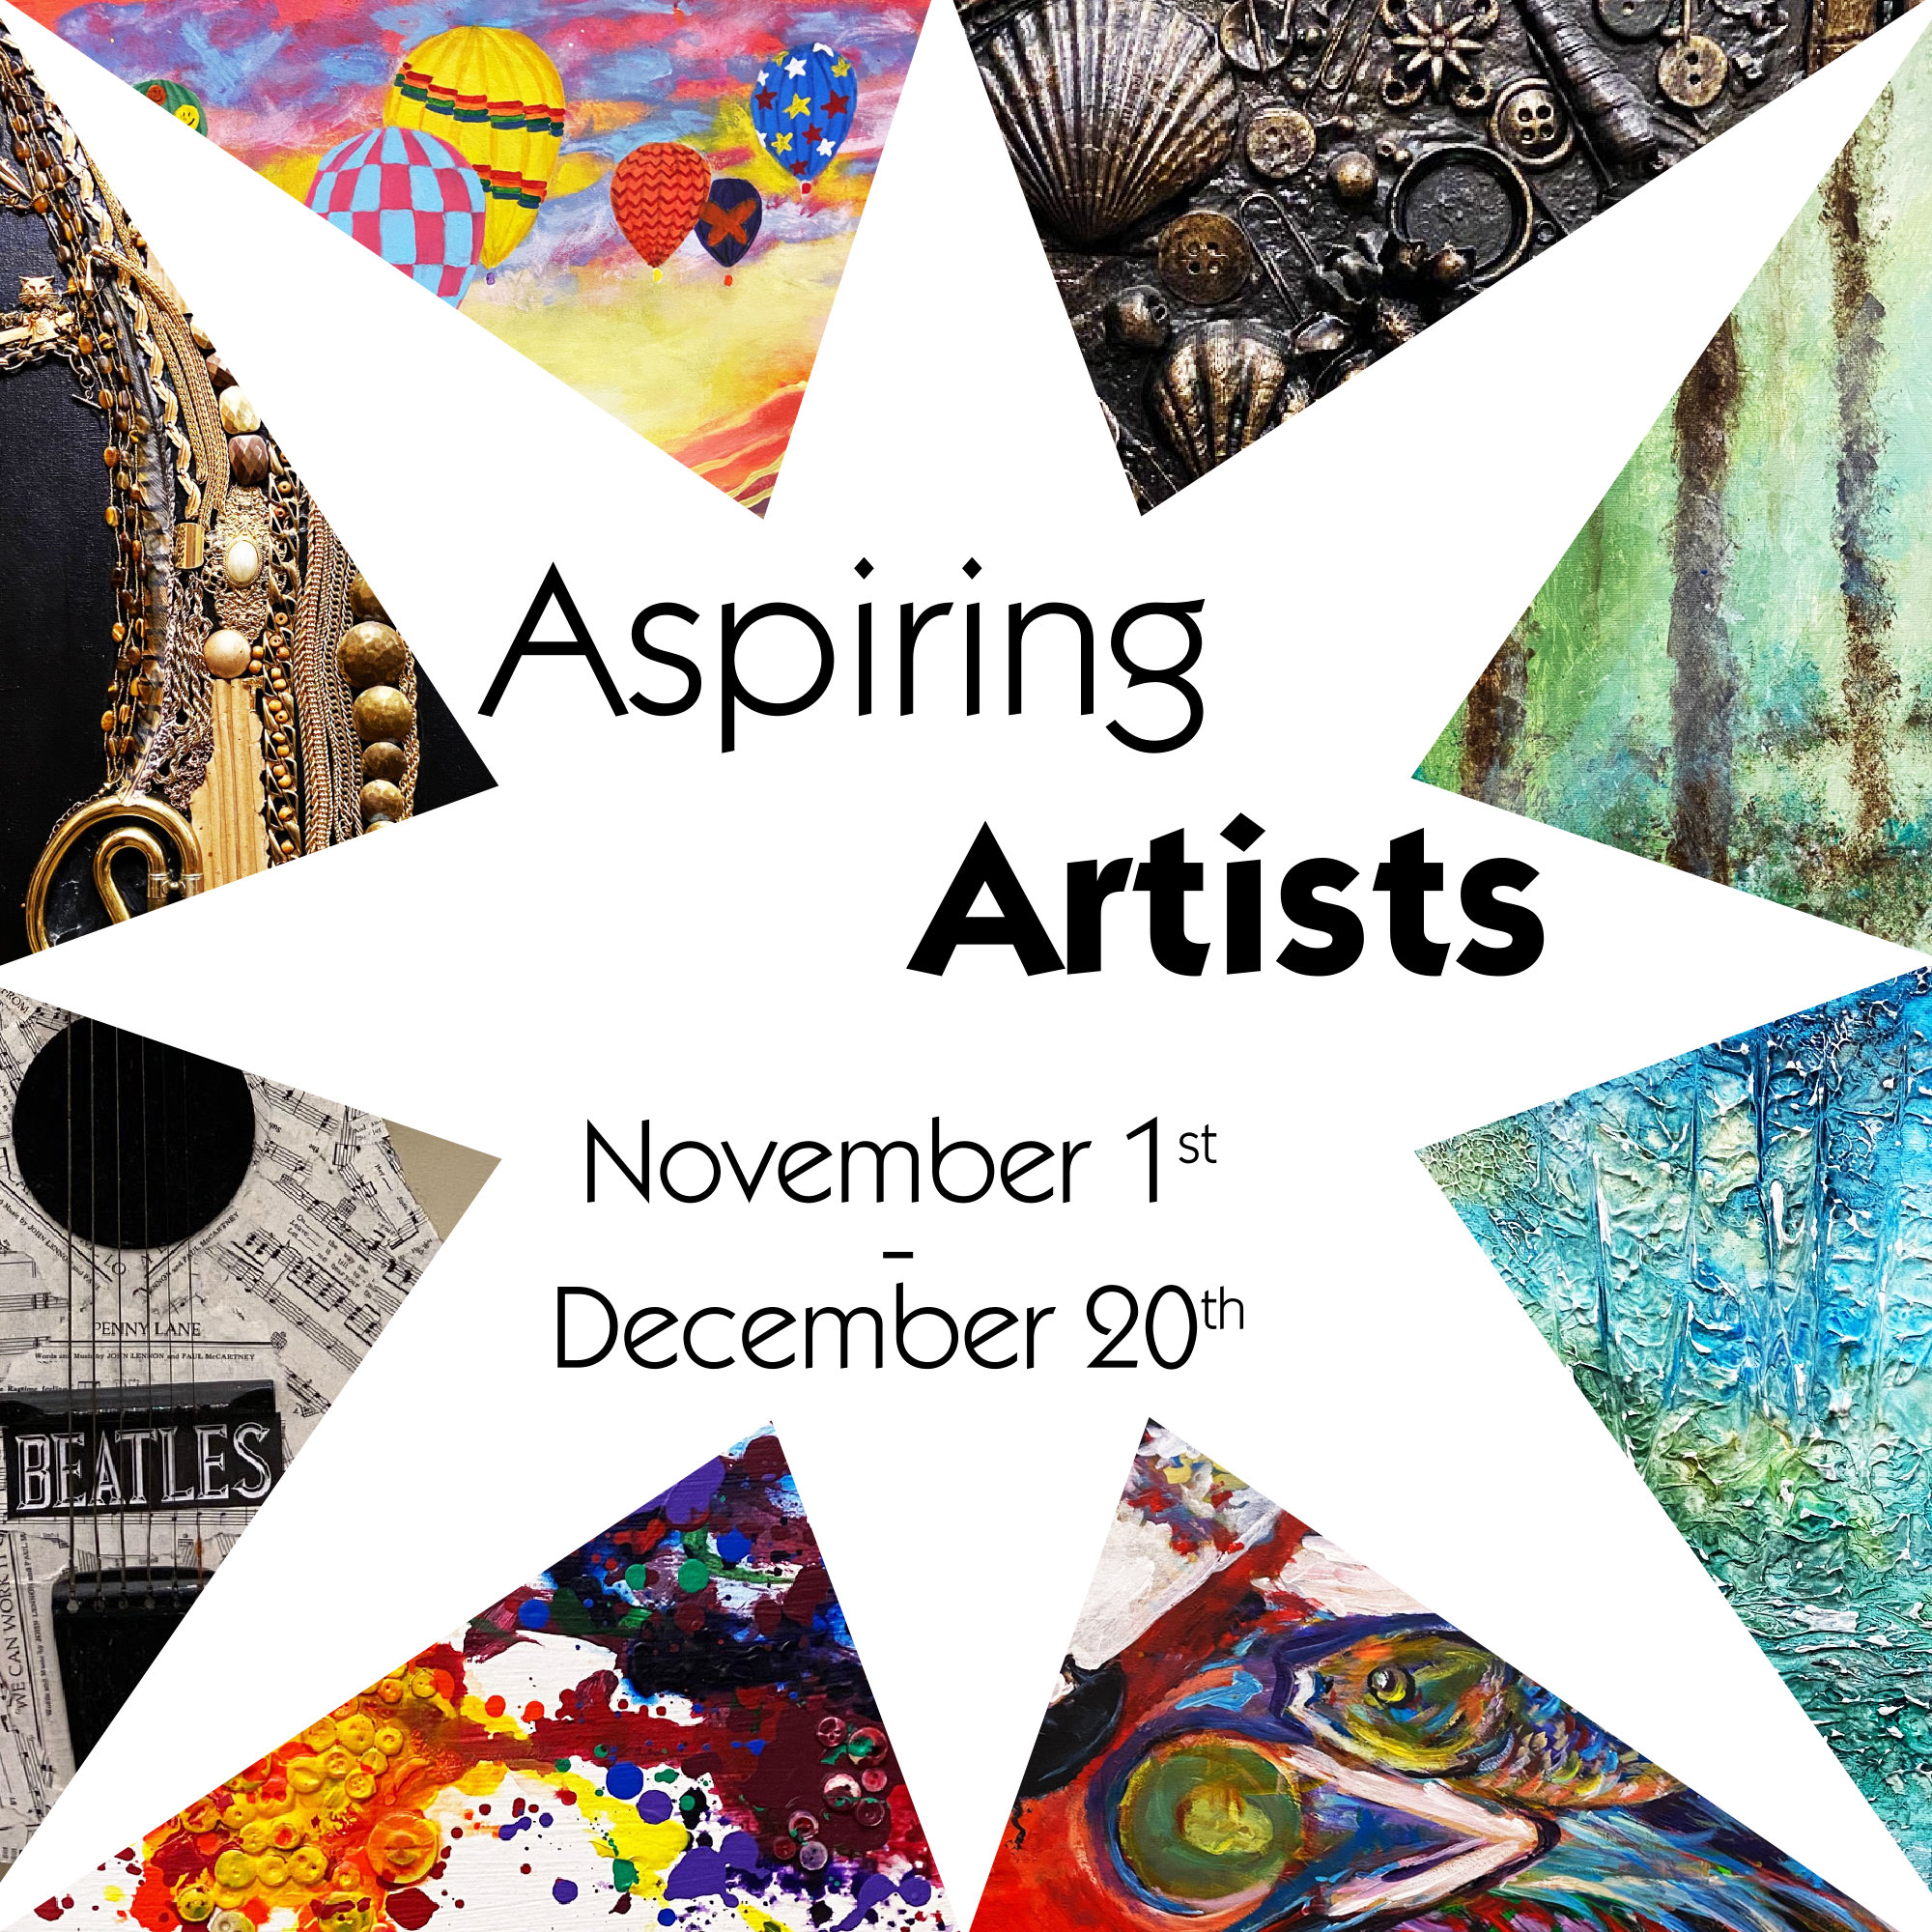 Aspiring Artists Gallery